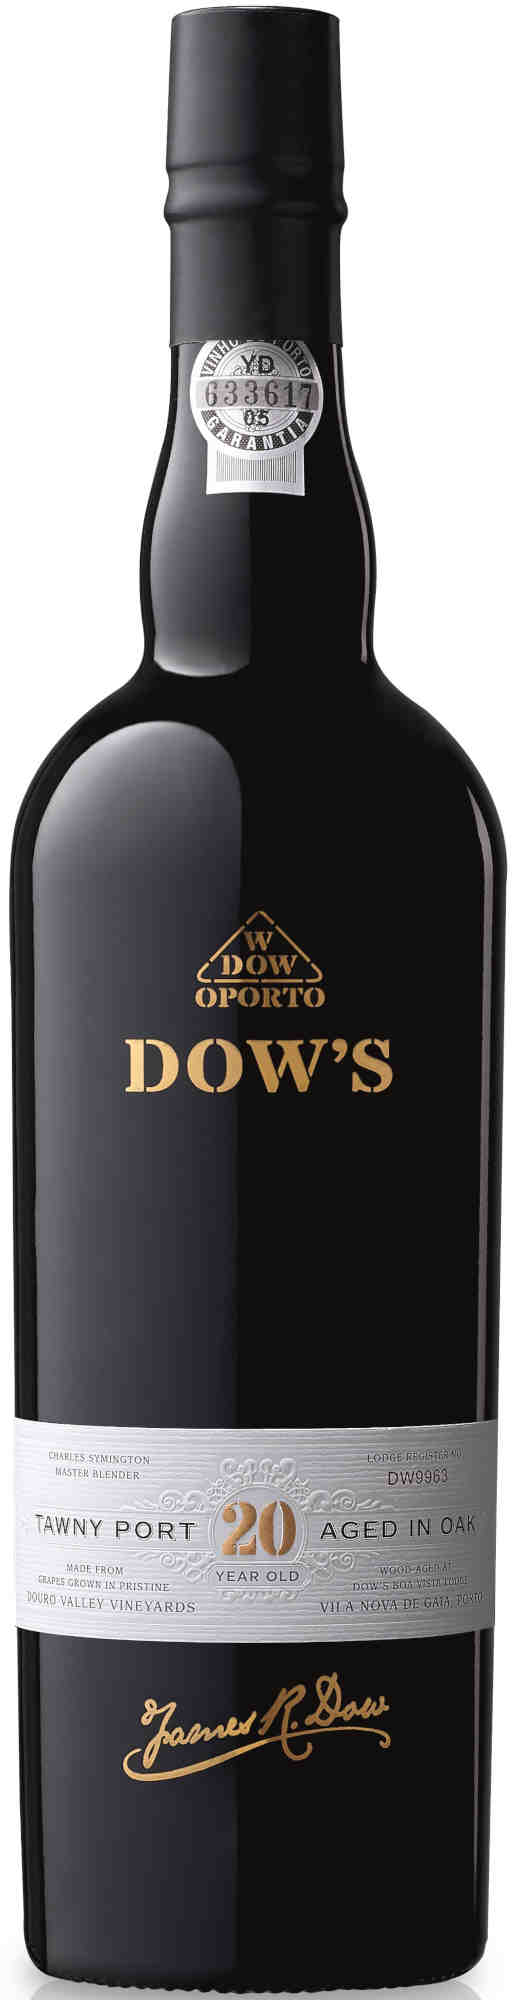 Dows-20-Years-Tawny-Port